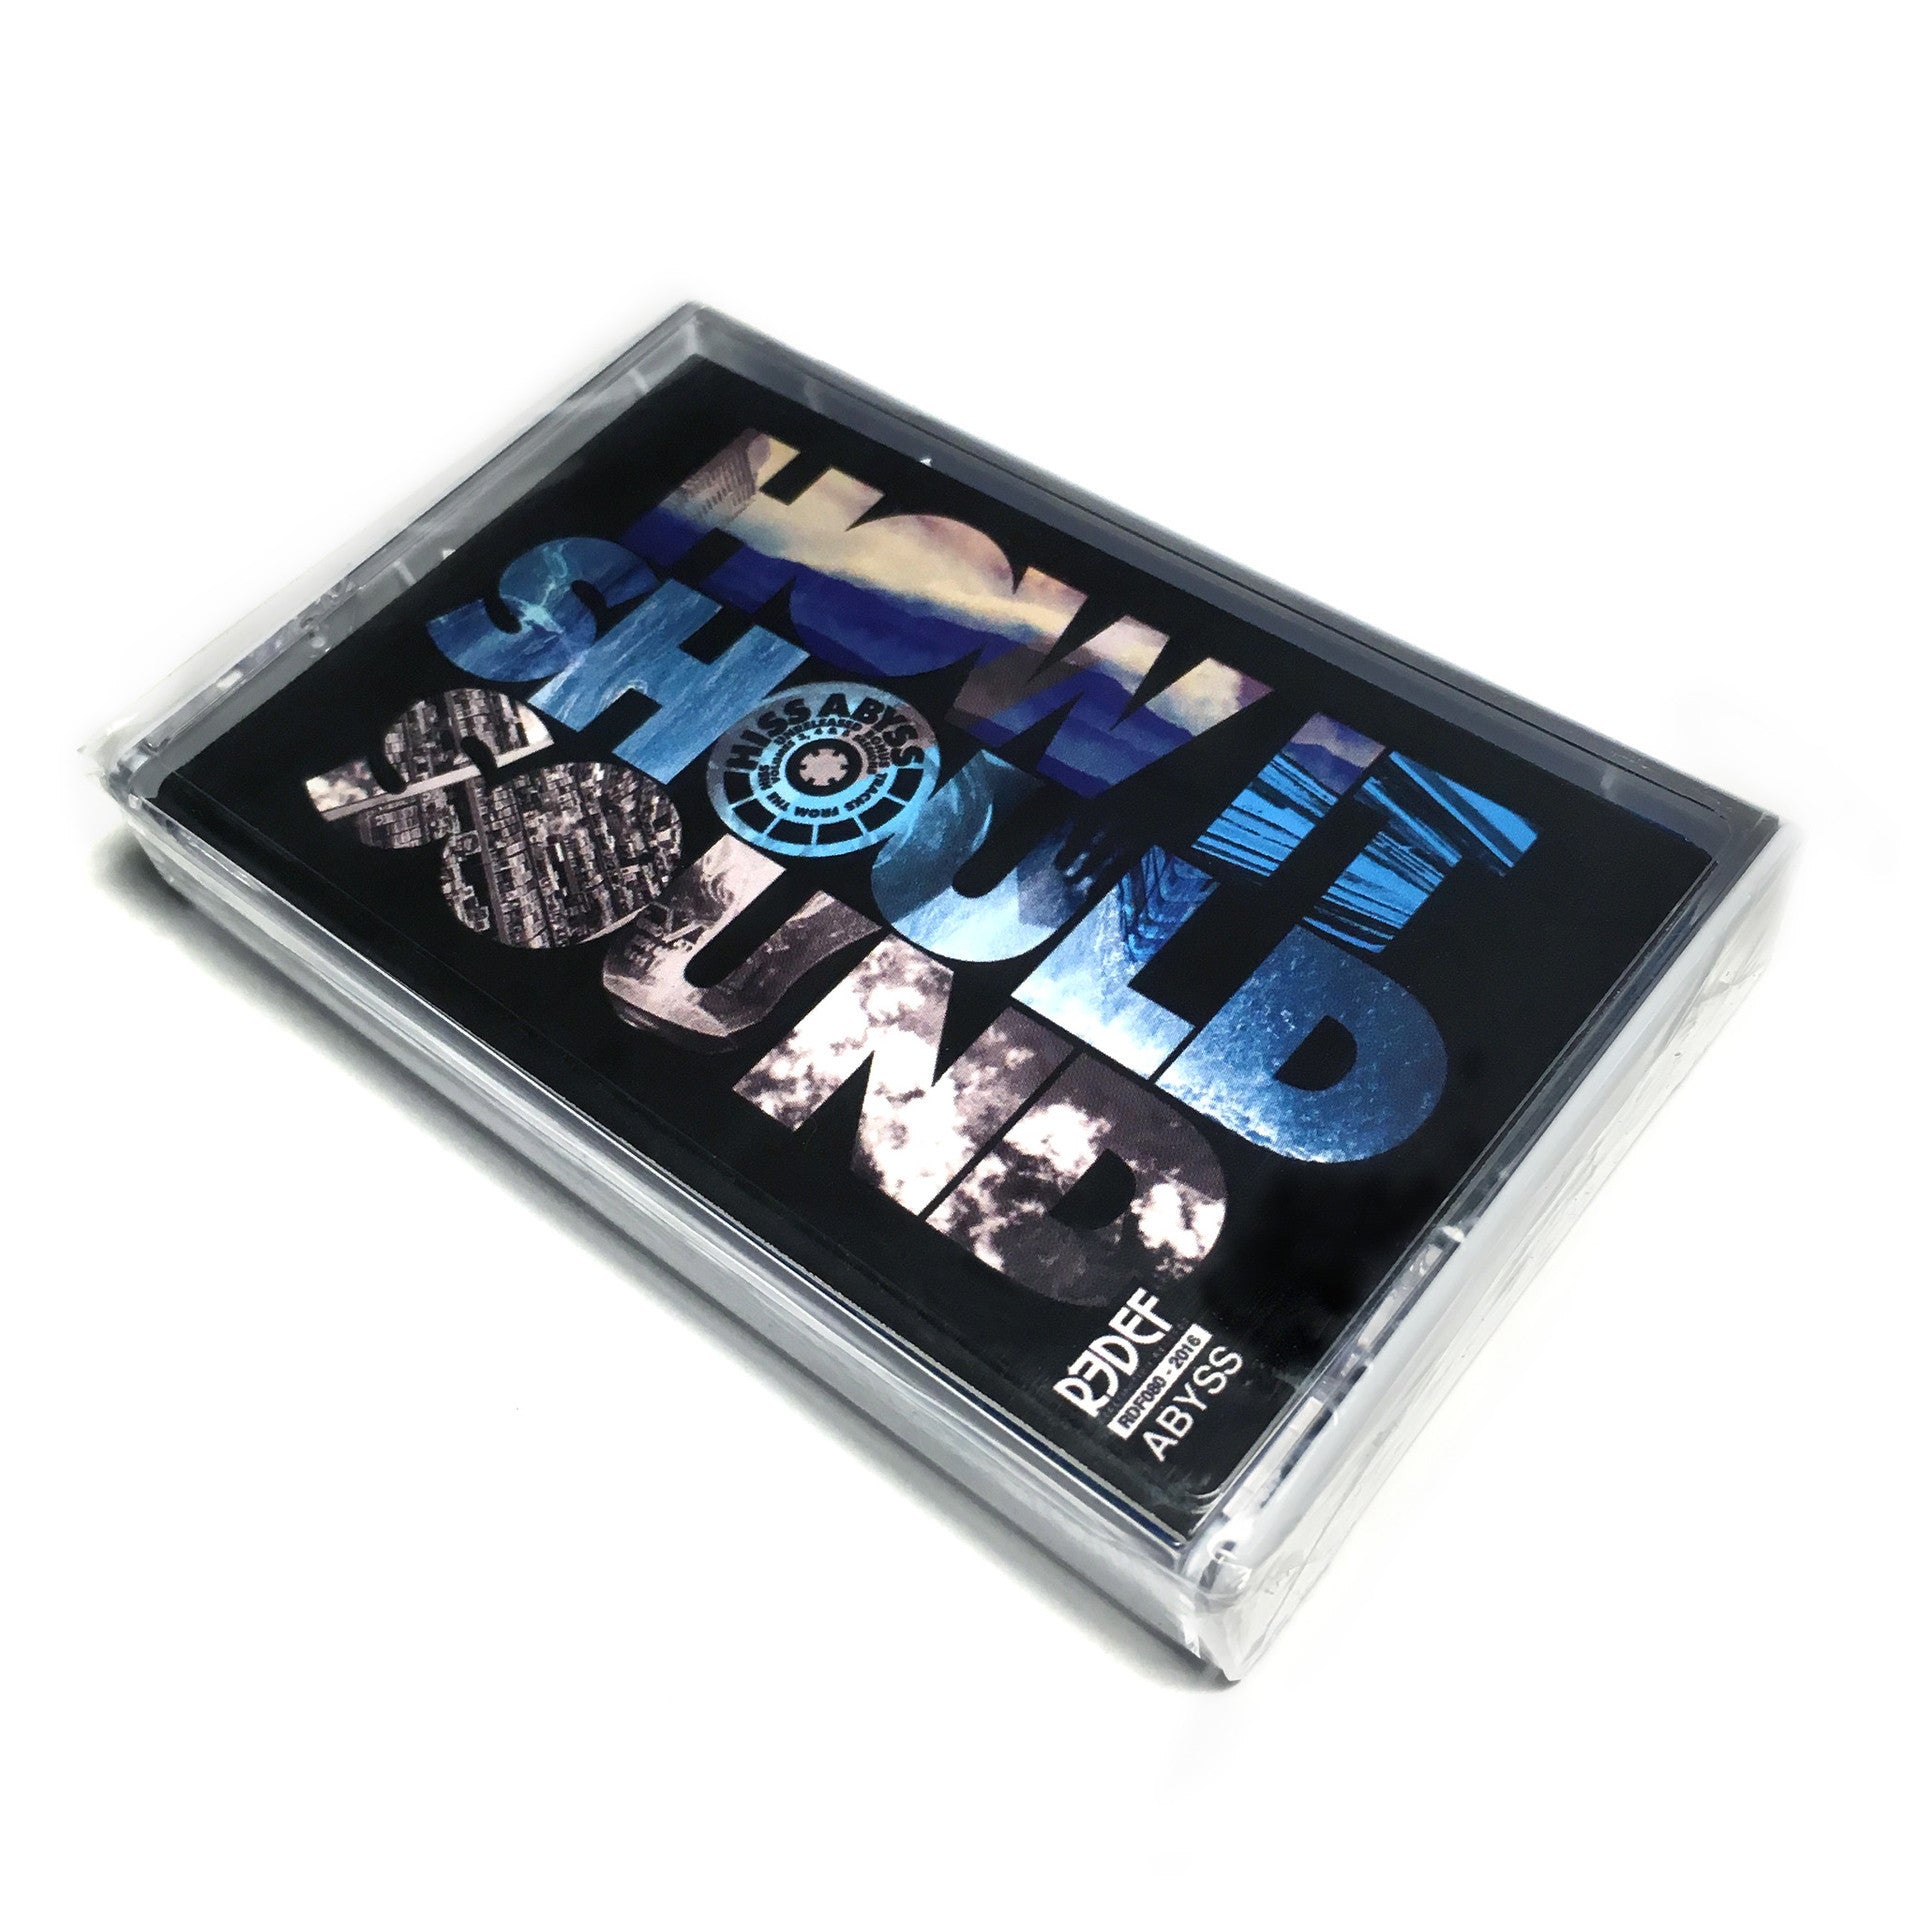 Damu The Fudgemunk - Hiss Abyss: How It Should Sound Bonus EPNew Cassette 2016 ReDeff Cassette Store Day Limited Edition Blue Tape - Instrumental HipHop / Beat Music